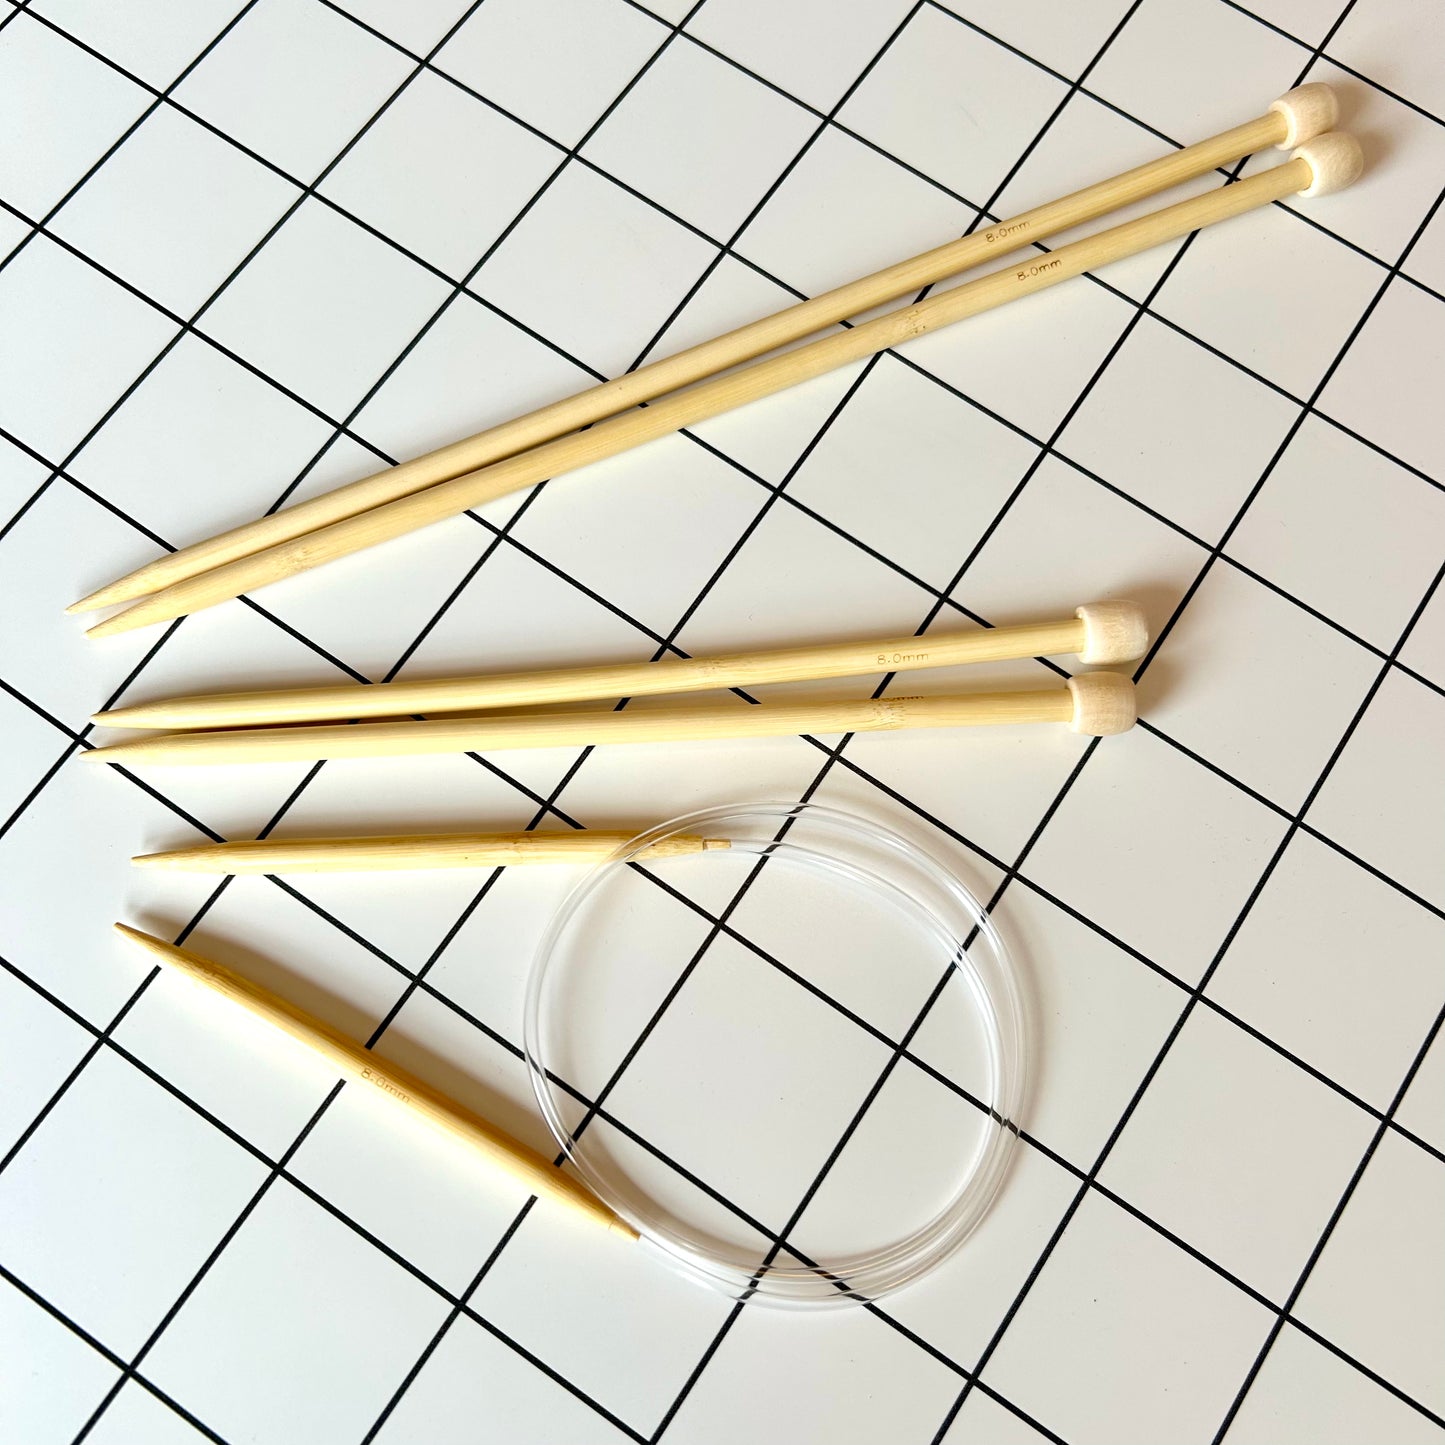 8mm knitting needle bundle | circular and straight knitting needles | Wooden knitting needles